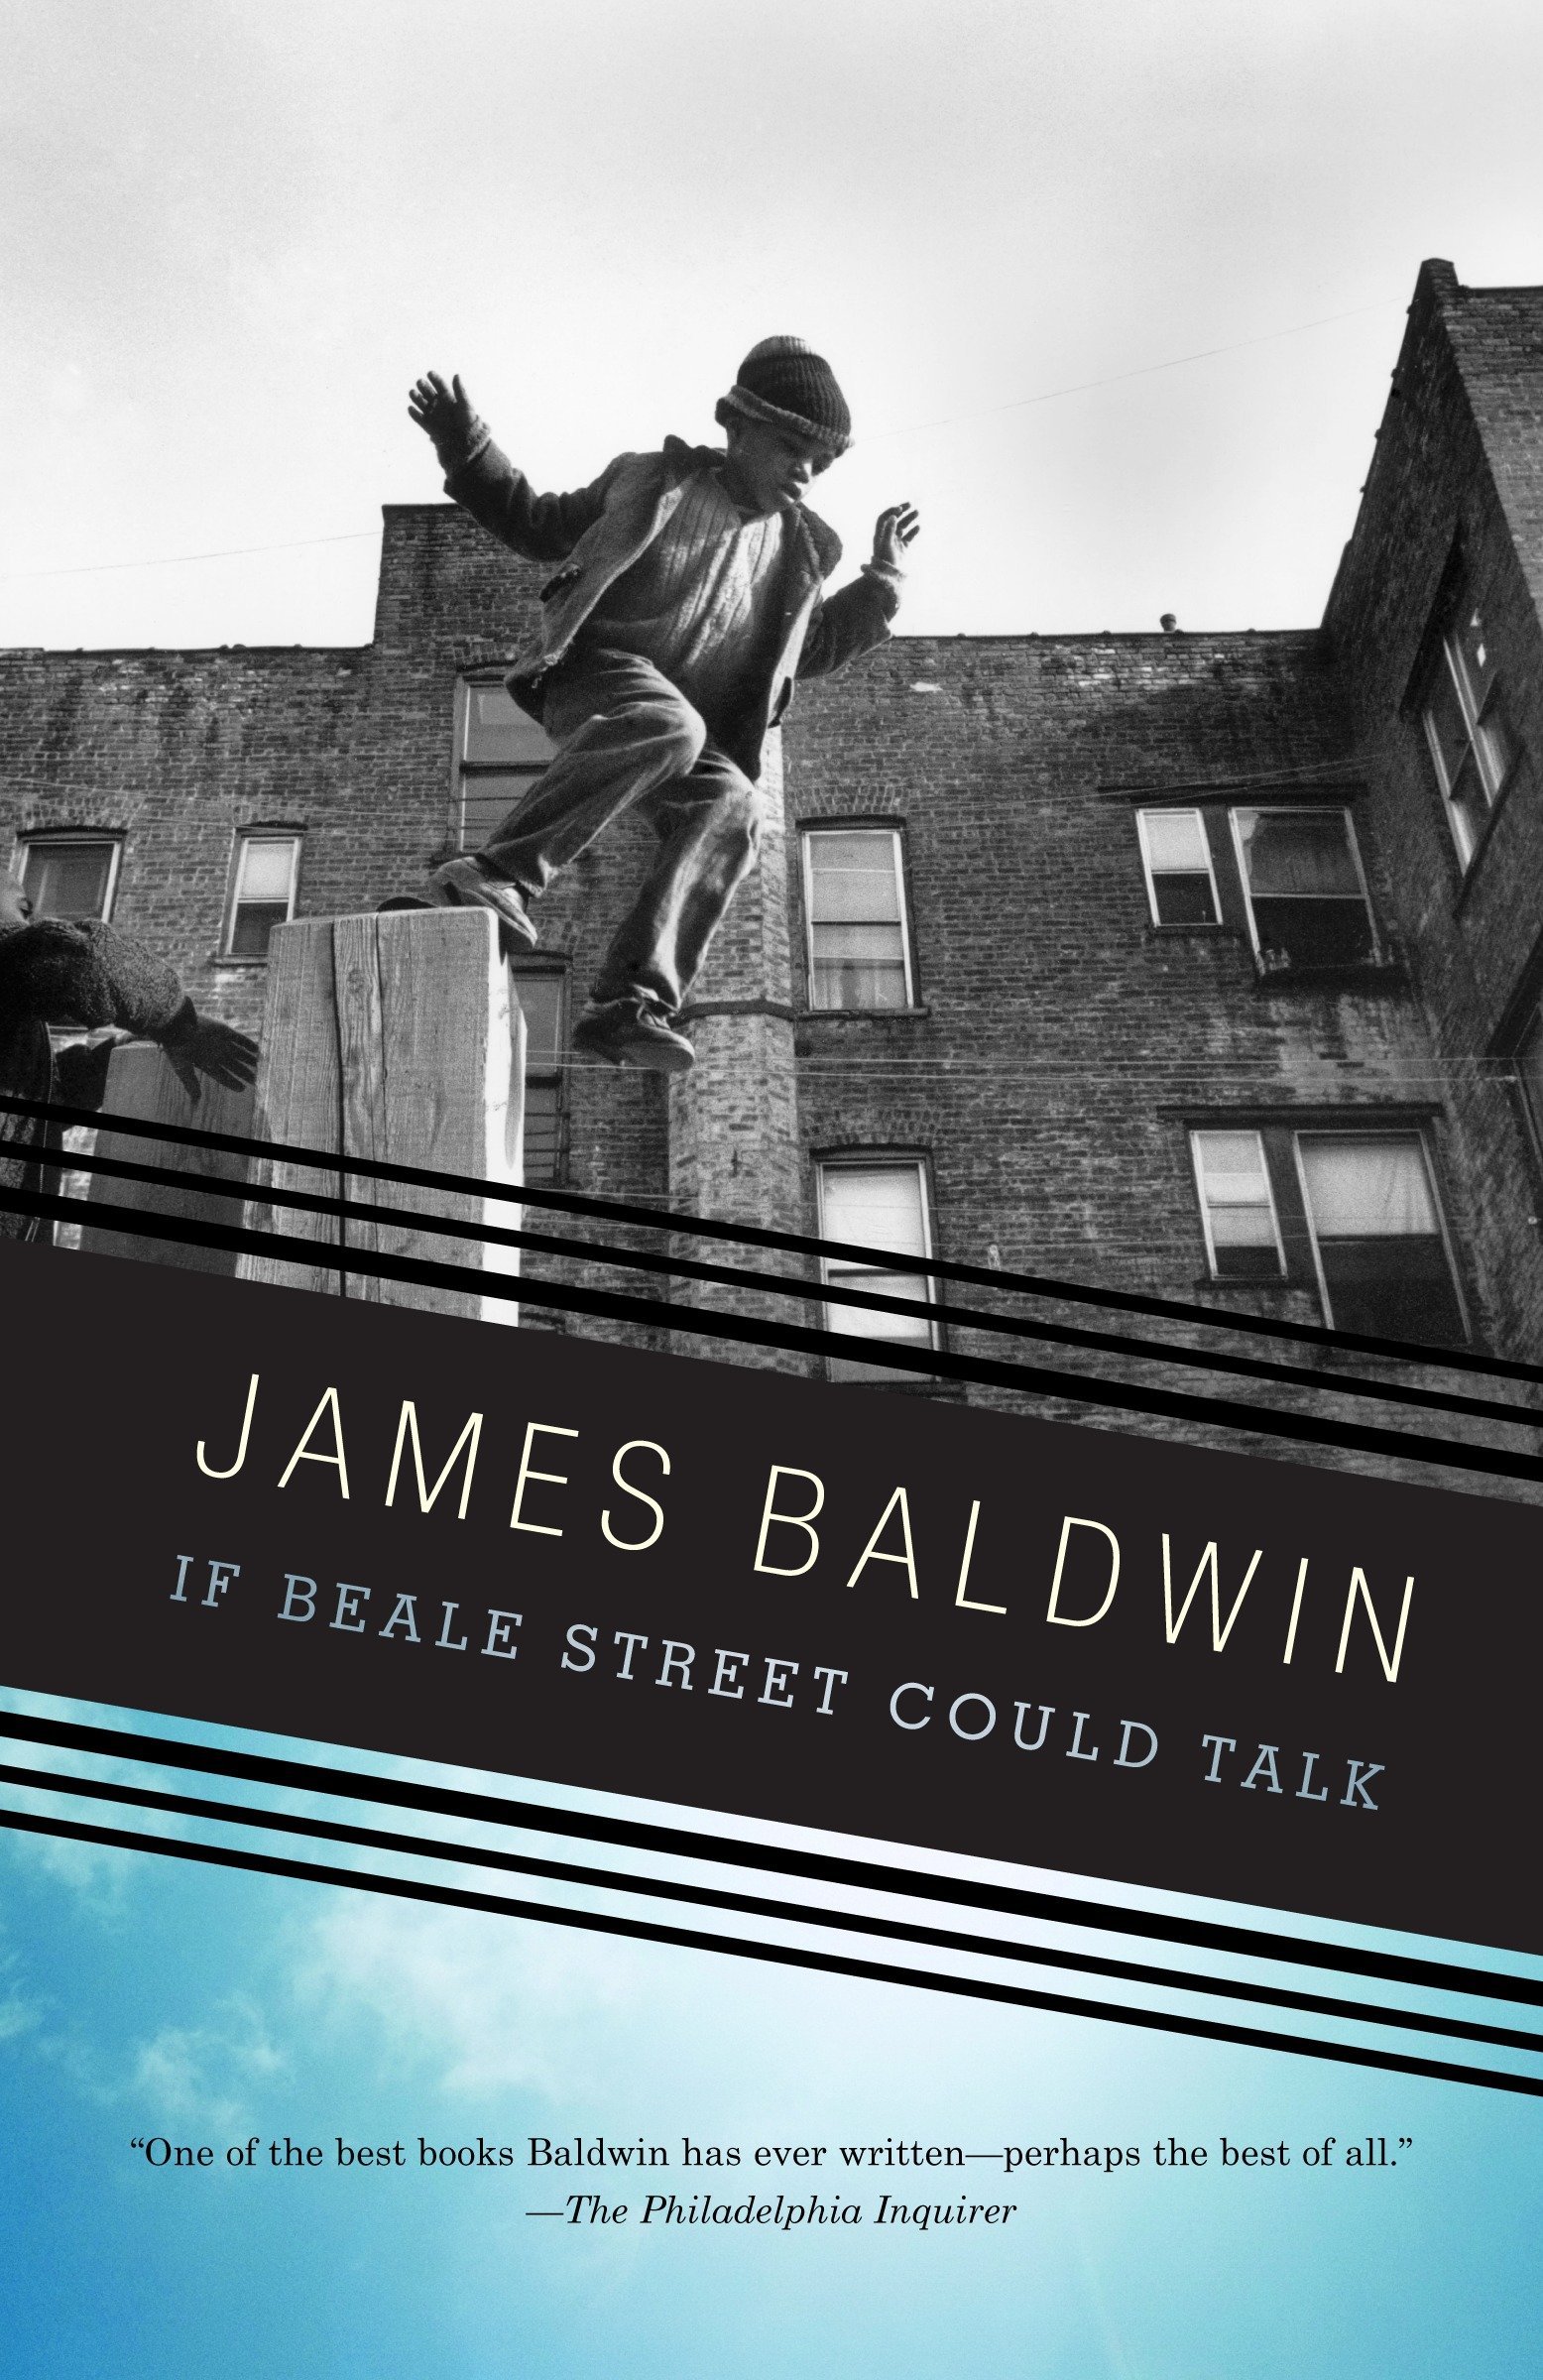 Beale street book